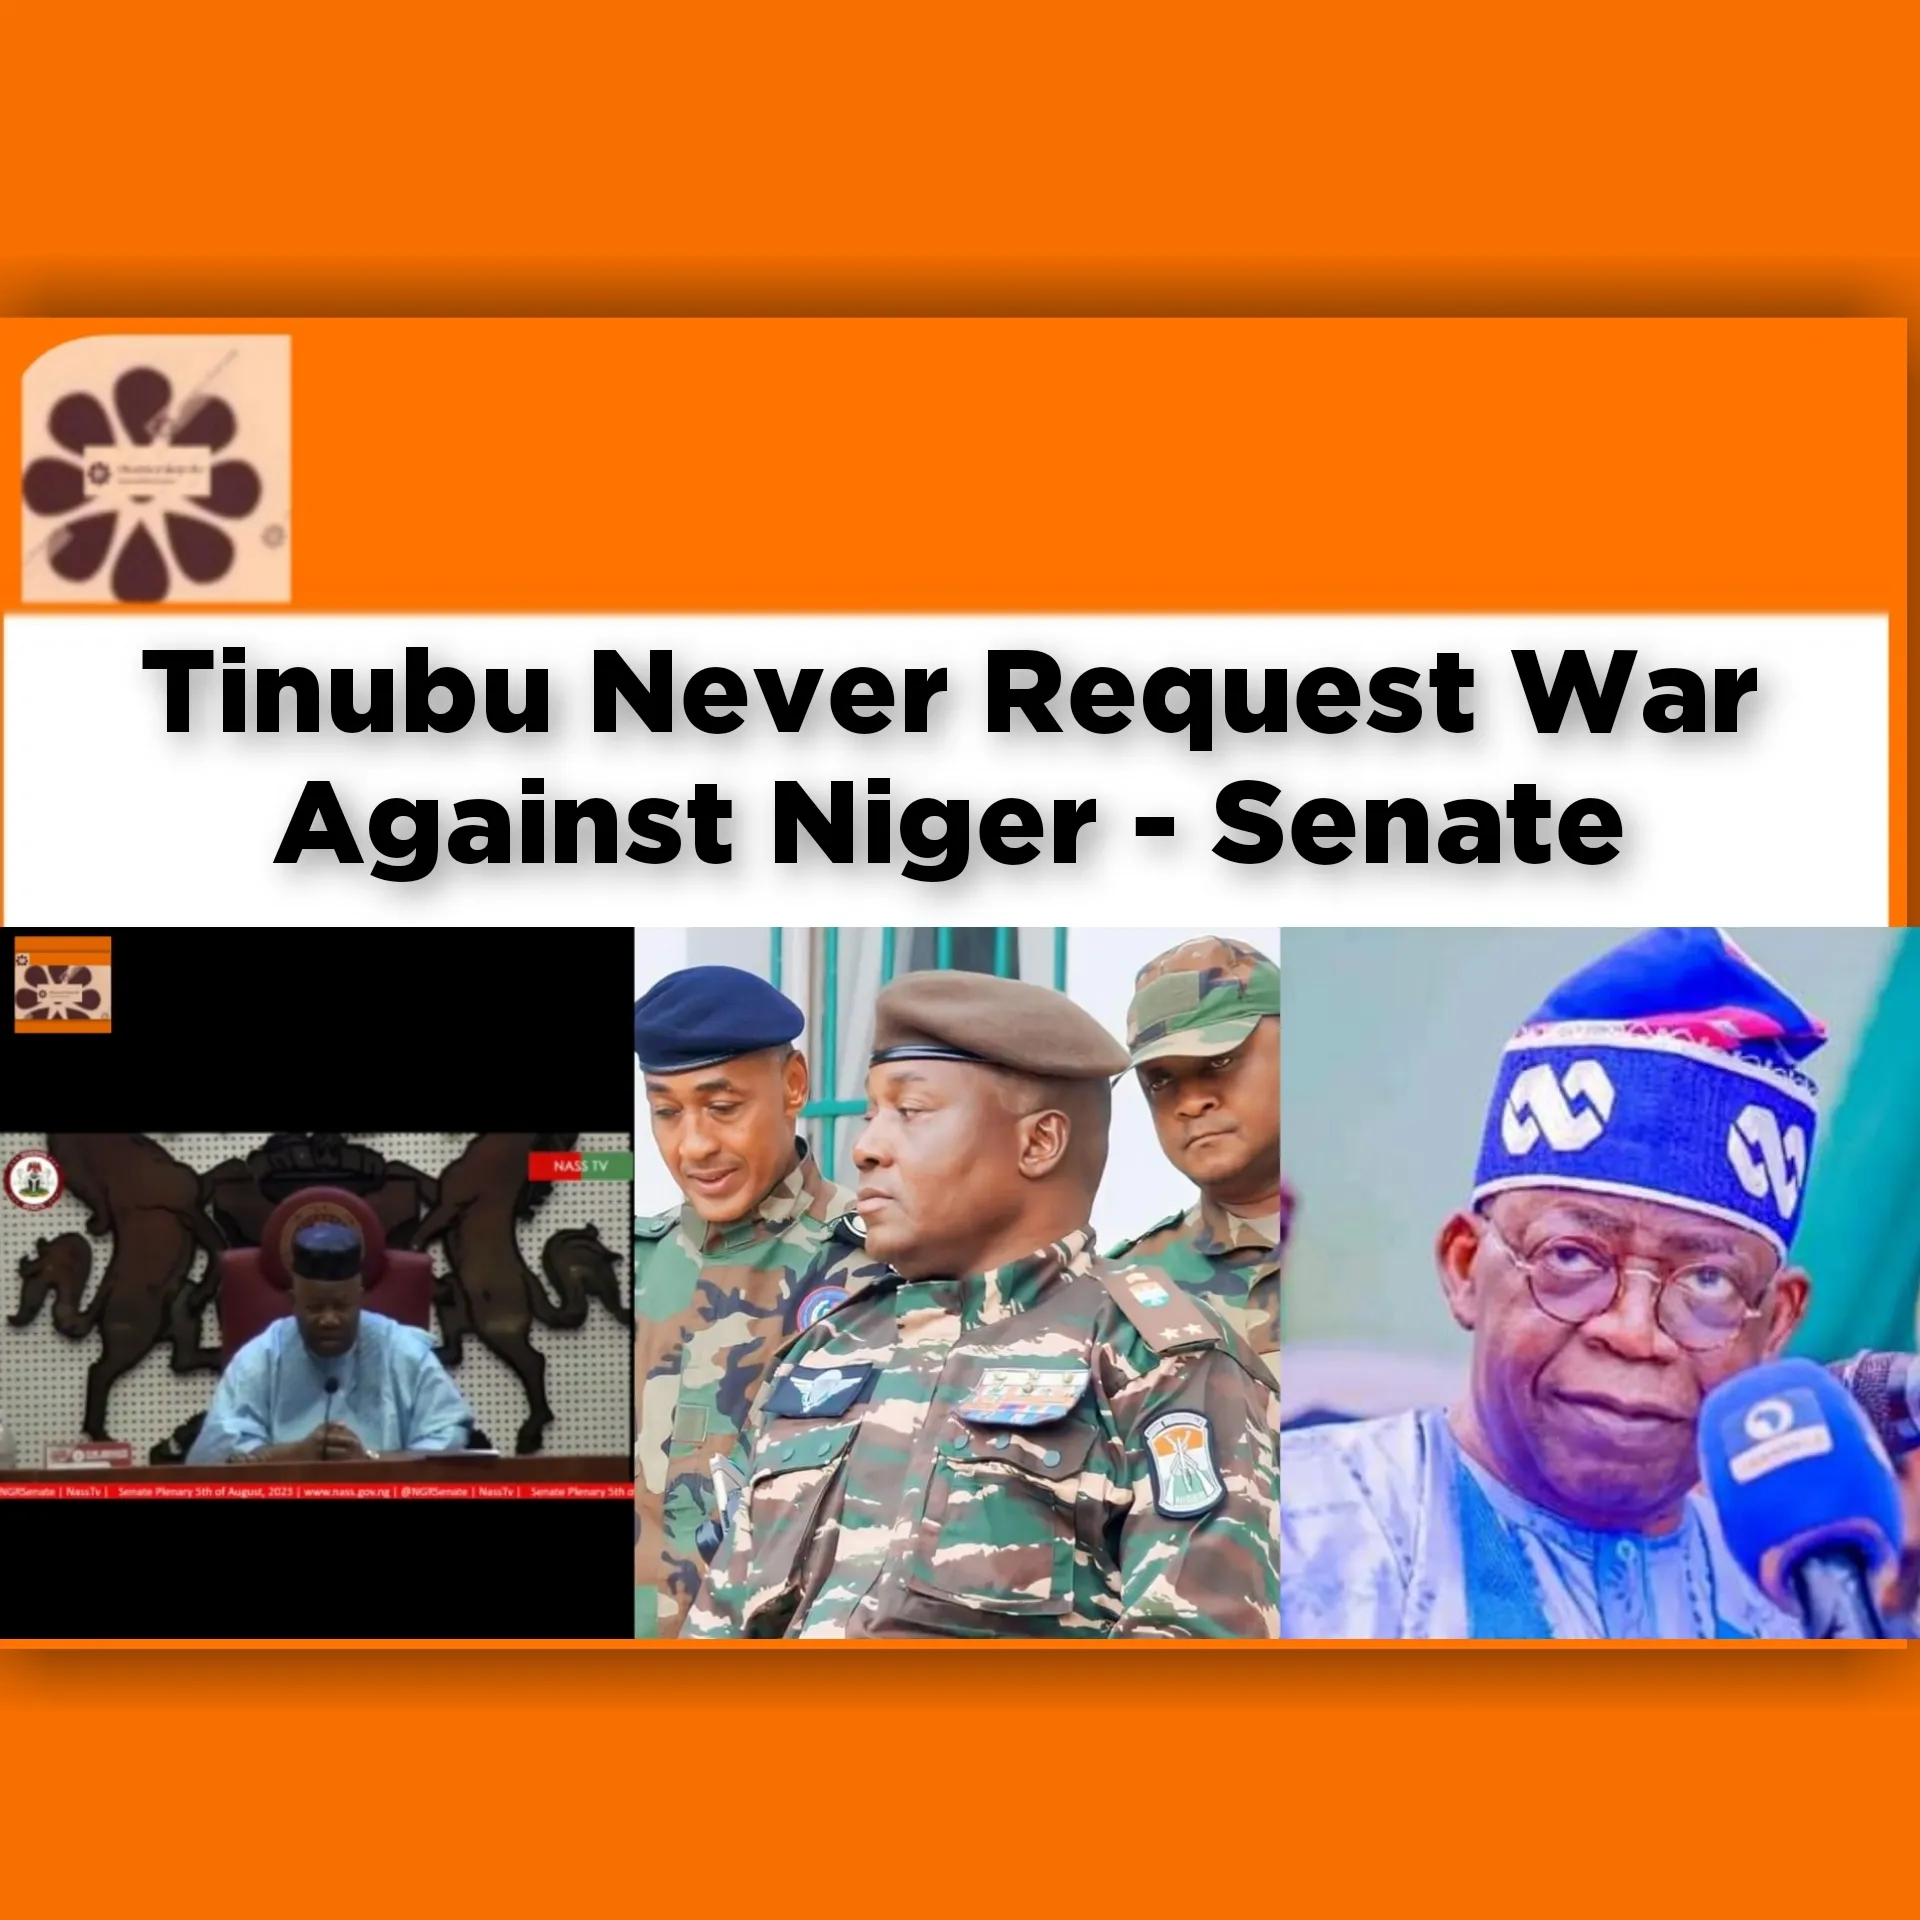 Tinubu Never Request War Against Niger - Senate ~ OsazuwaAkonedo #Abdourahamane #Akpabio #Bazoum #Bola #Burkina #Coup #ECOWAS #Faso #Godswill #Libya #Mali #Mohammed #Niamey #Niger #Nigeria #Senate #Tinubu